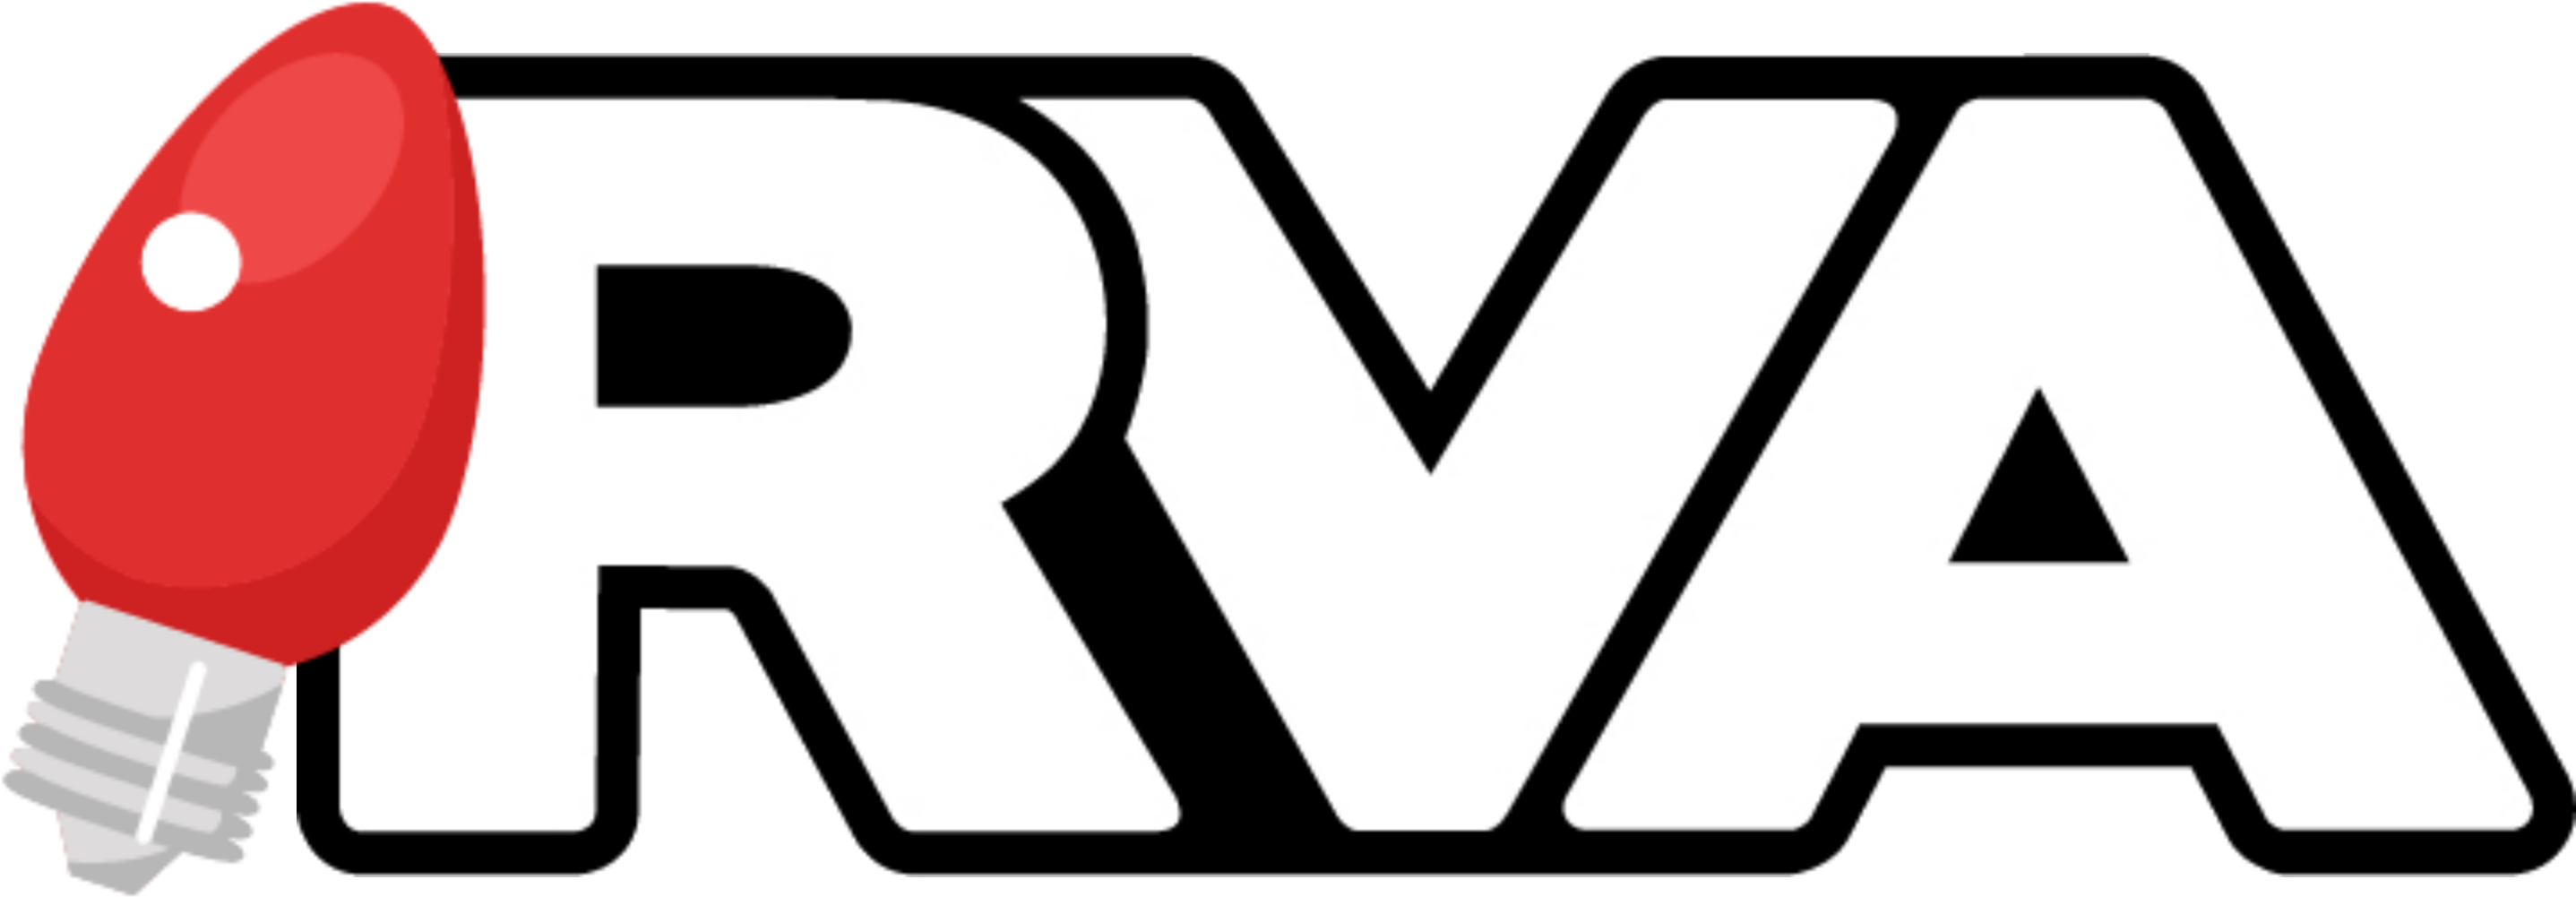 11/28/2017 For More Than 30 Years Richmond, Virginia - Shower Door Logo (3200x1200)